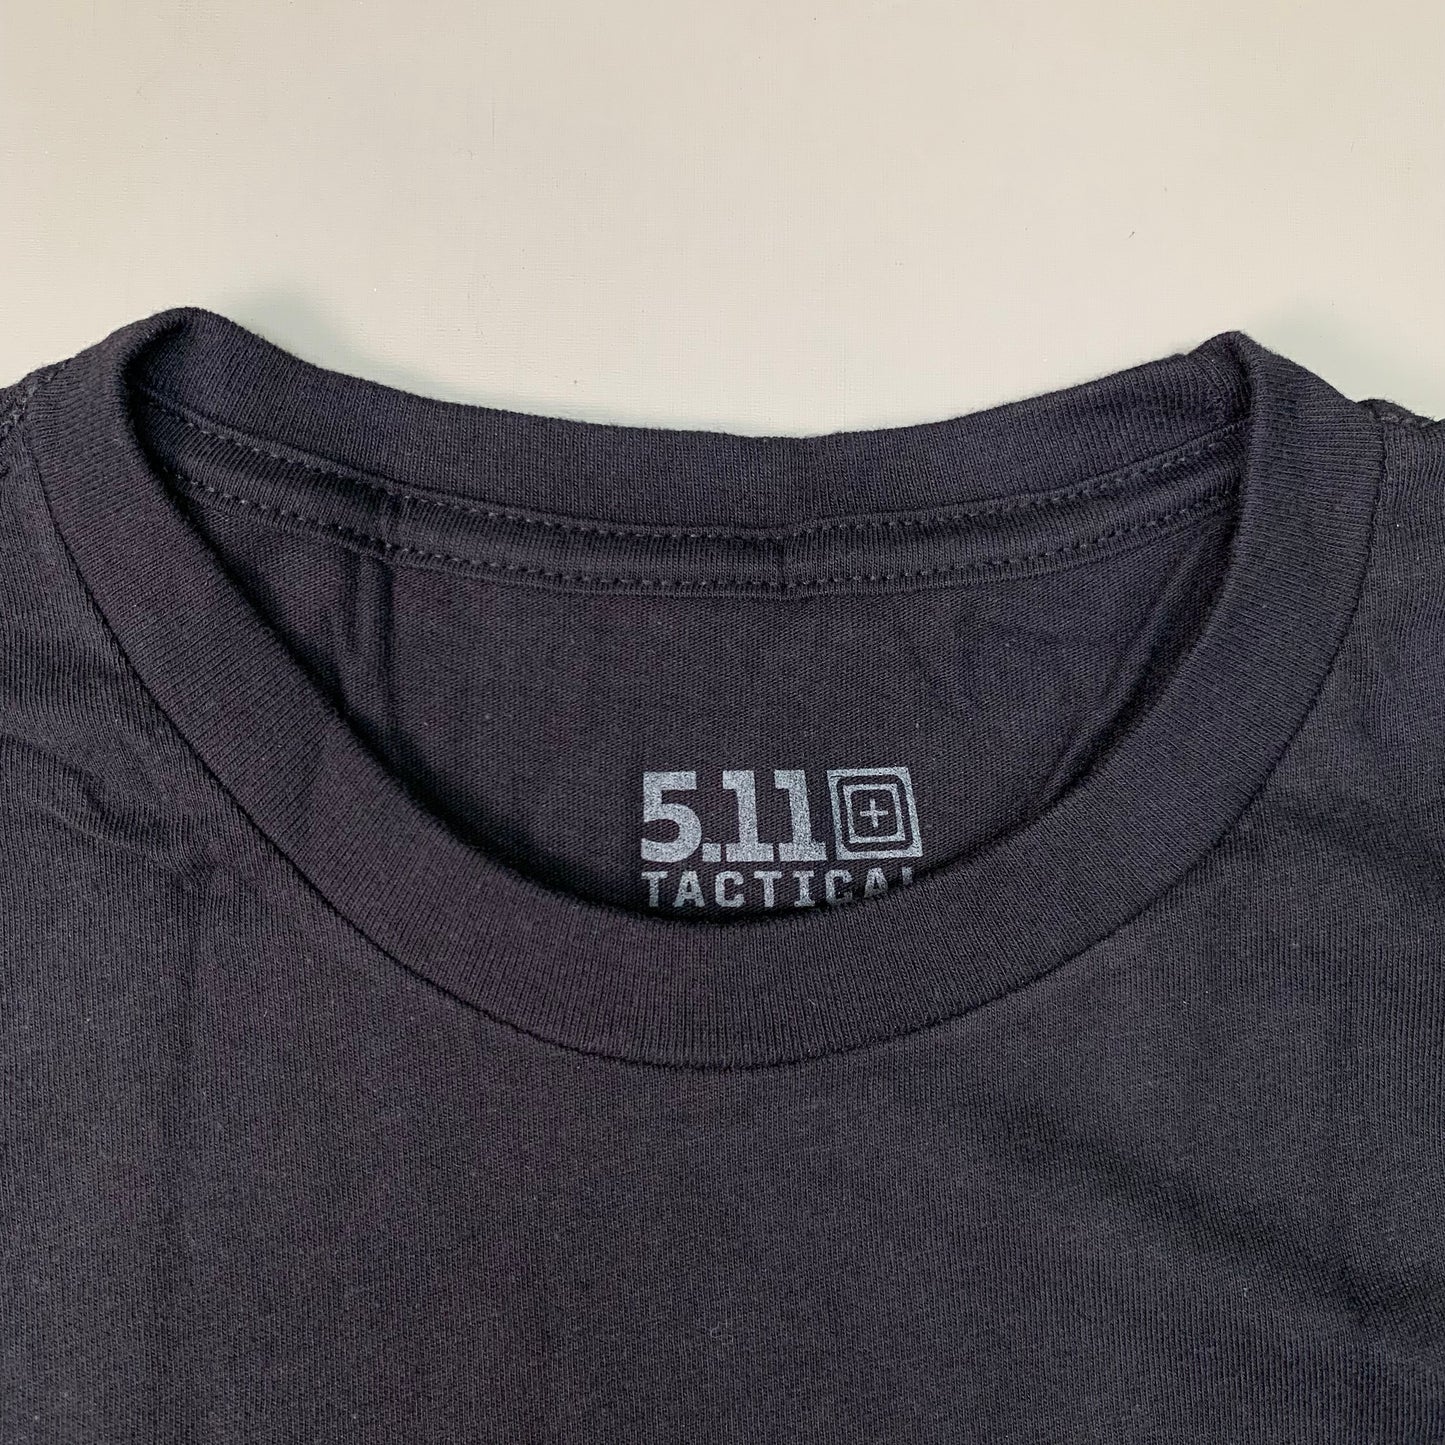 5.11 TACTICAL All Bark All Bite T-Shirt 100% Cotton 019 Black Sz M #76330